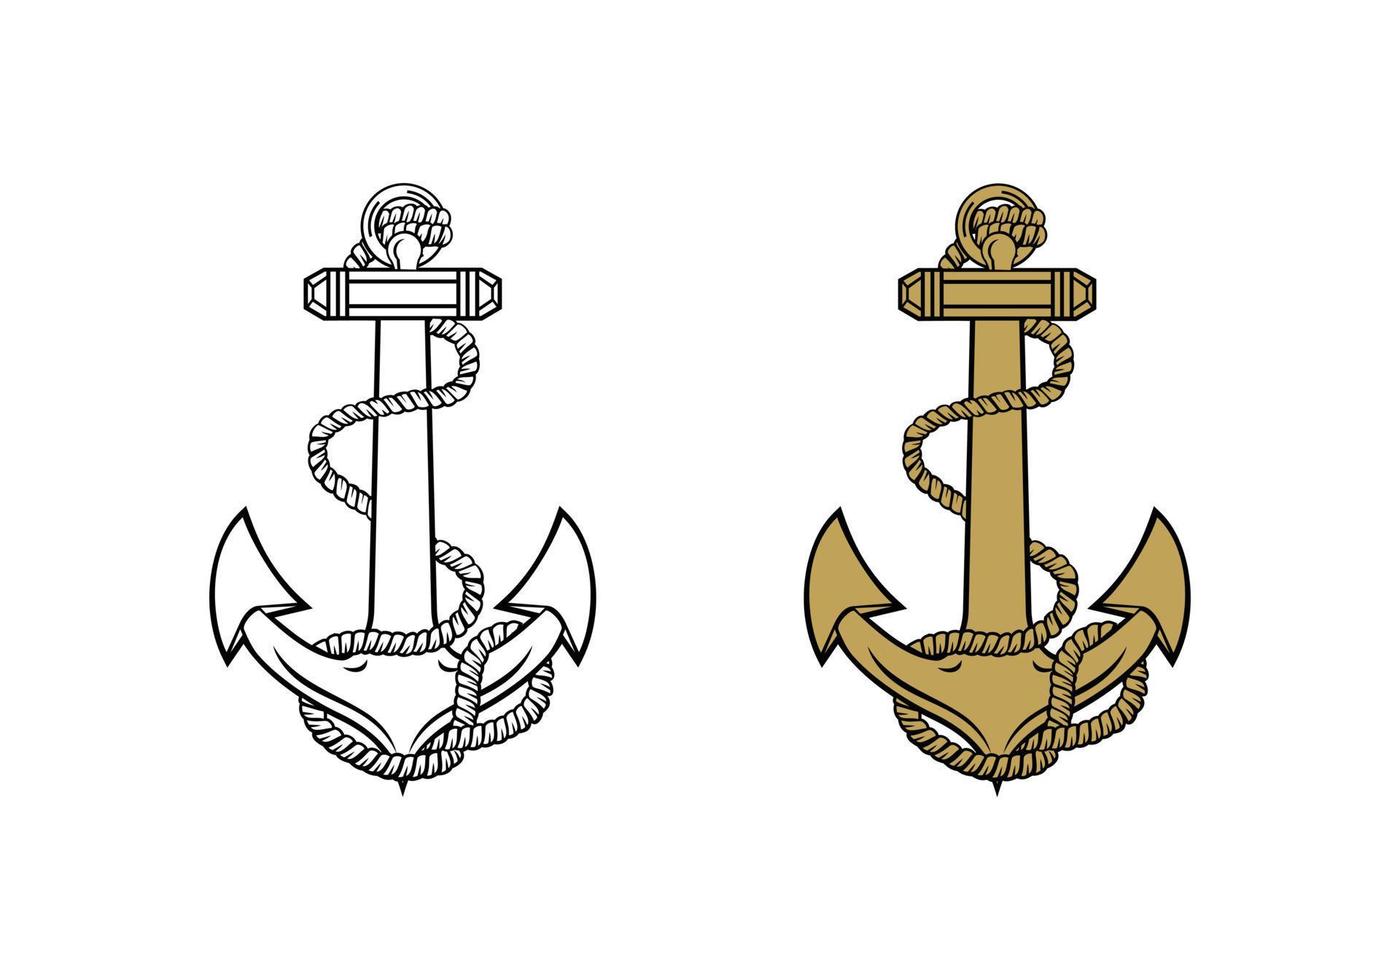 United State Marine Corps Anchor ega design illustration vector